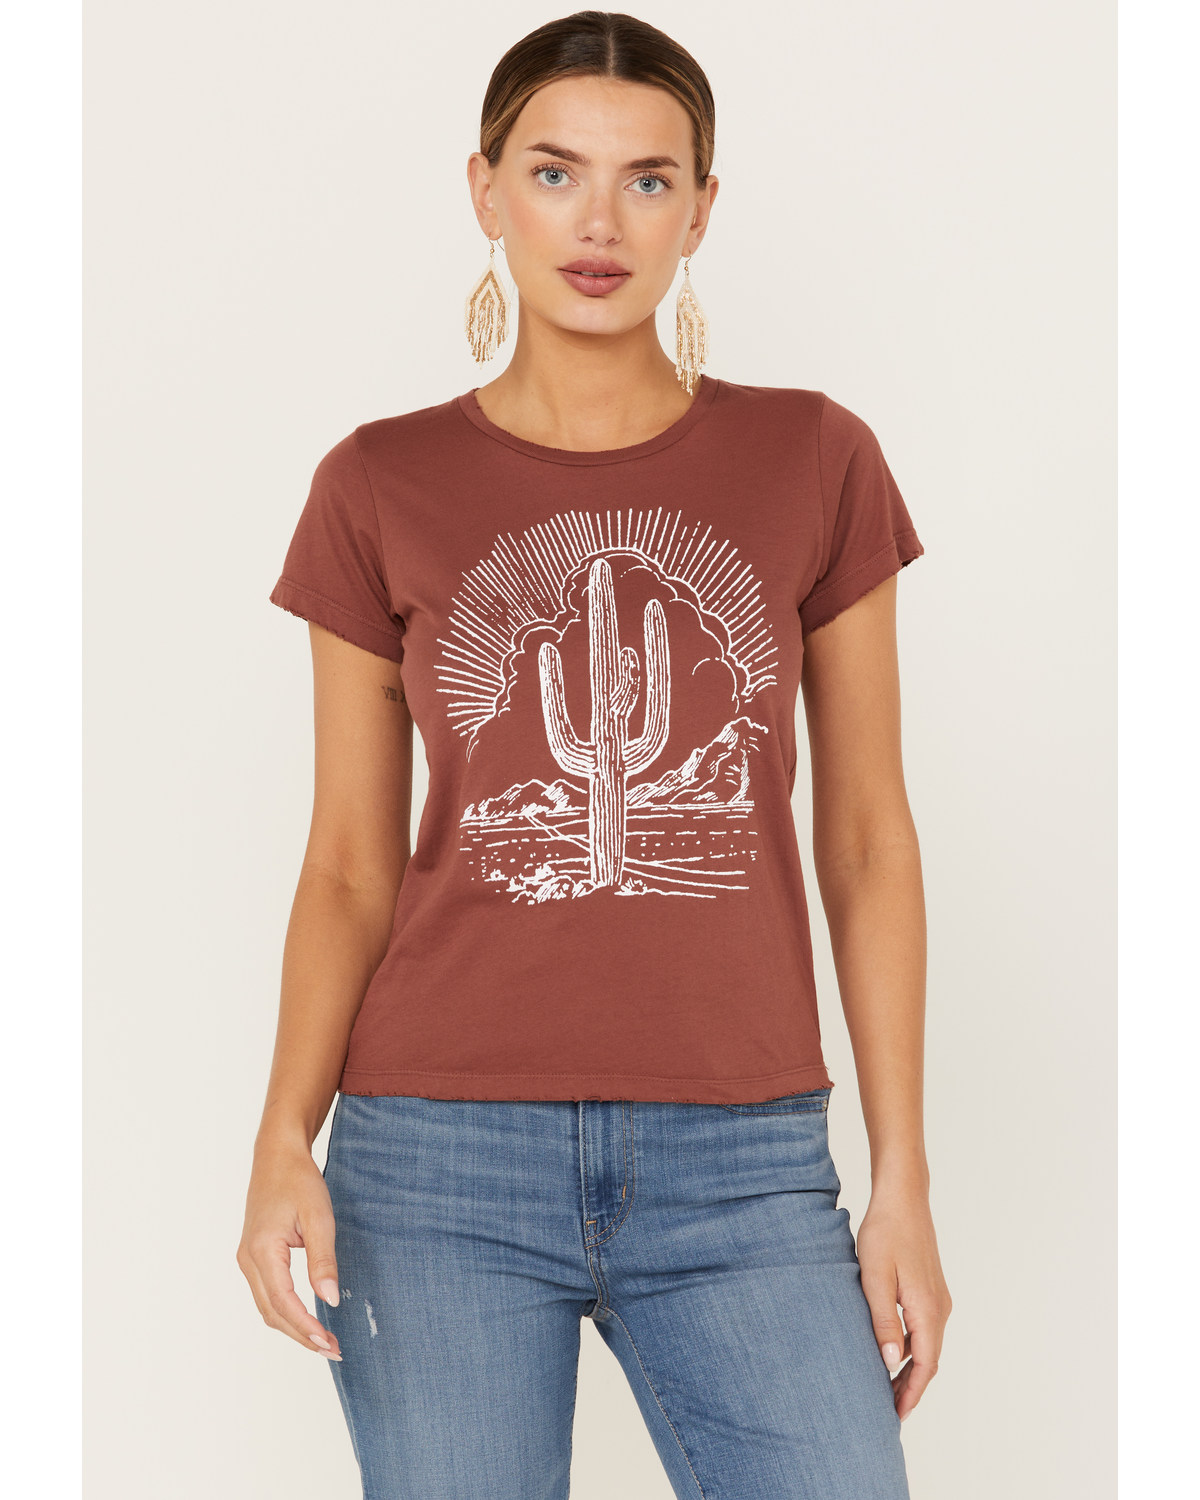 Bandit Brand Women's Cactus Short Sleeve Graphic Tee